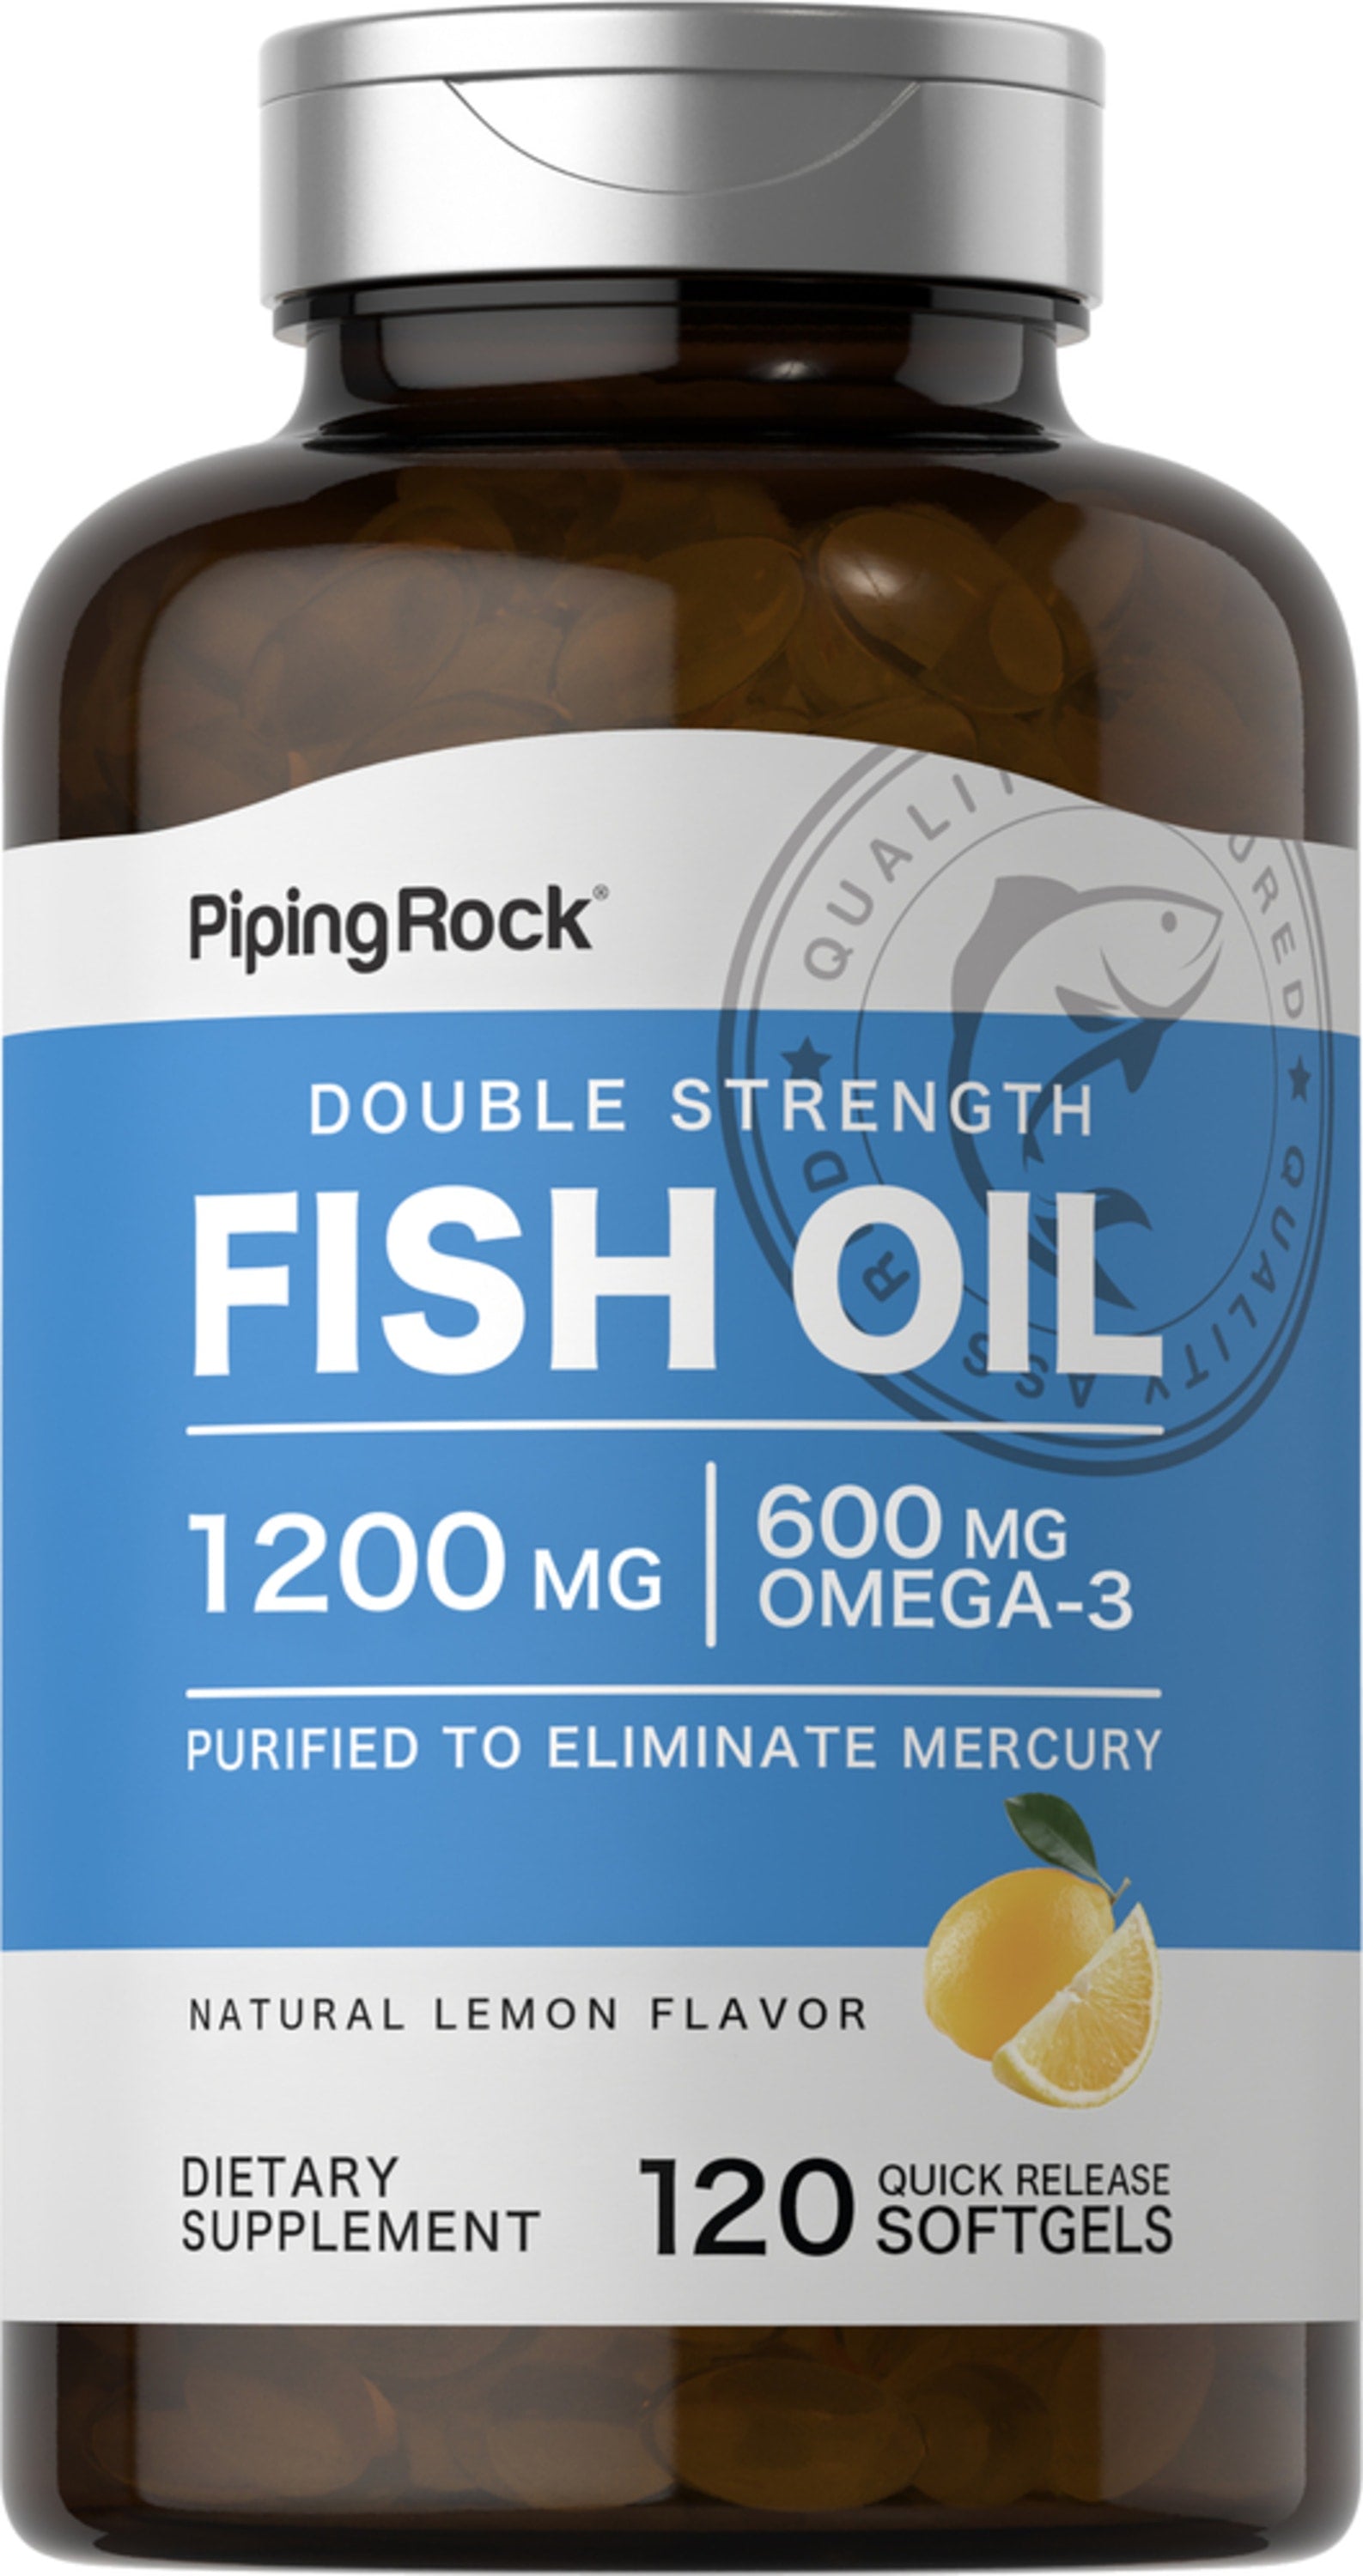 Double Strength Omega-3 Fish Oil Lemon Flavor, 1200 mg, 120 Quick Release Softgels